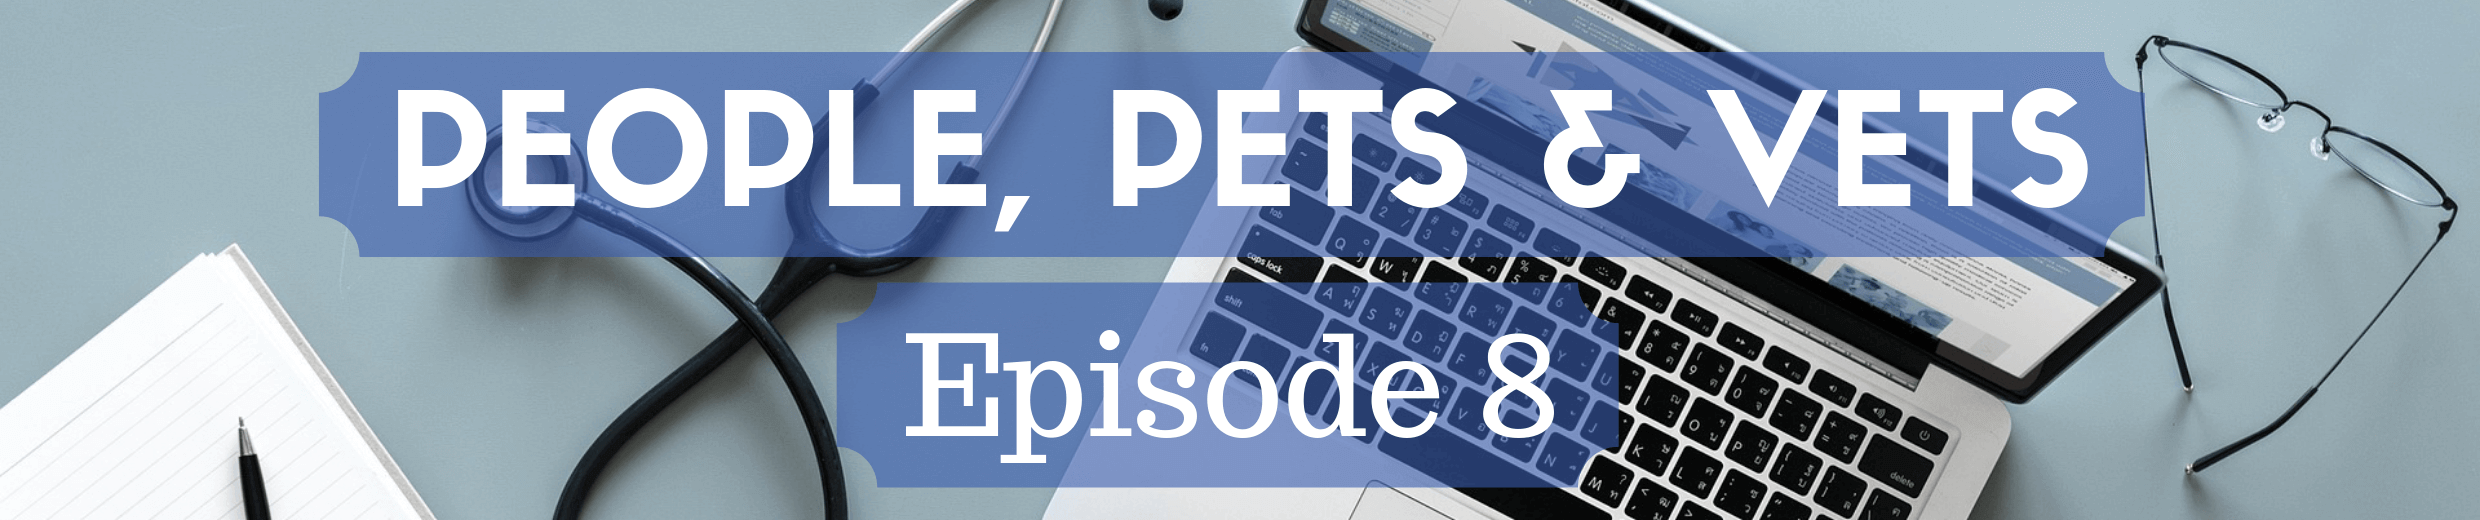 People, Pets & Vets: Episode 8